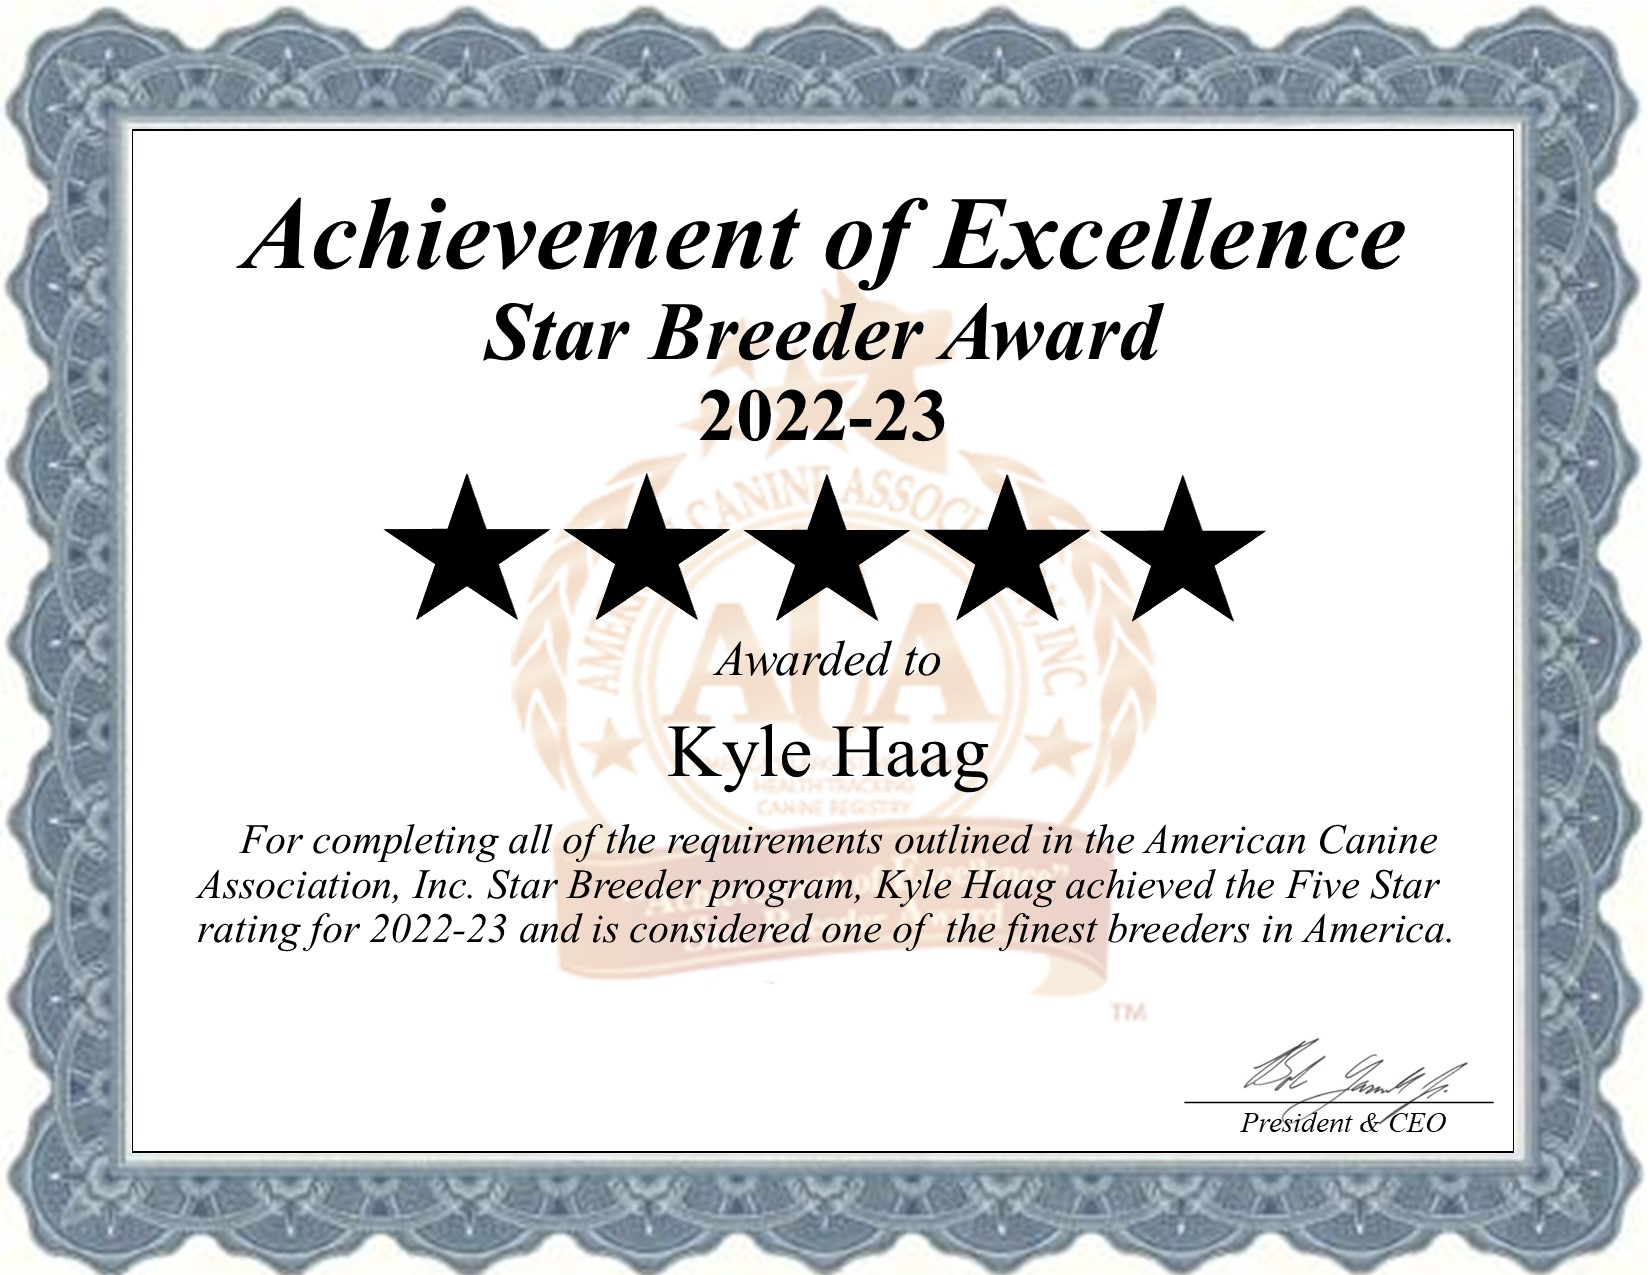 Kyle Haag dog breeder star breeder certificate